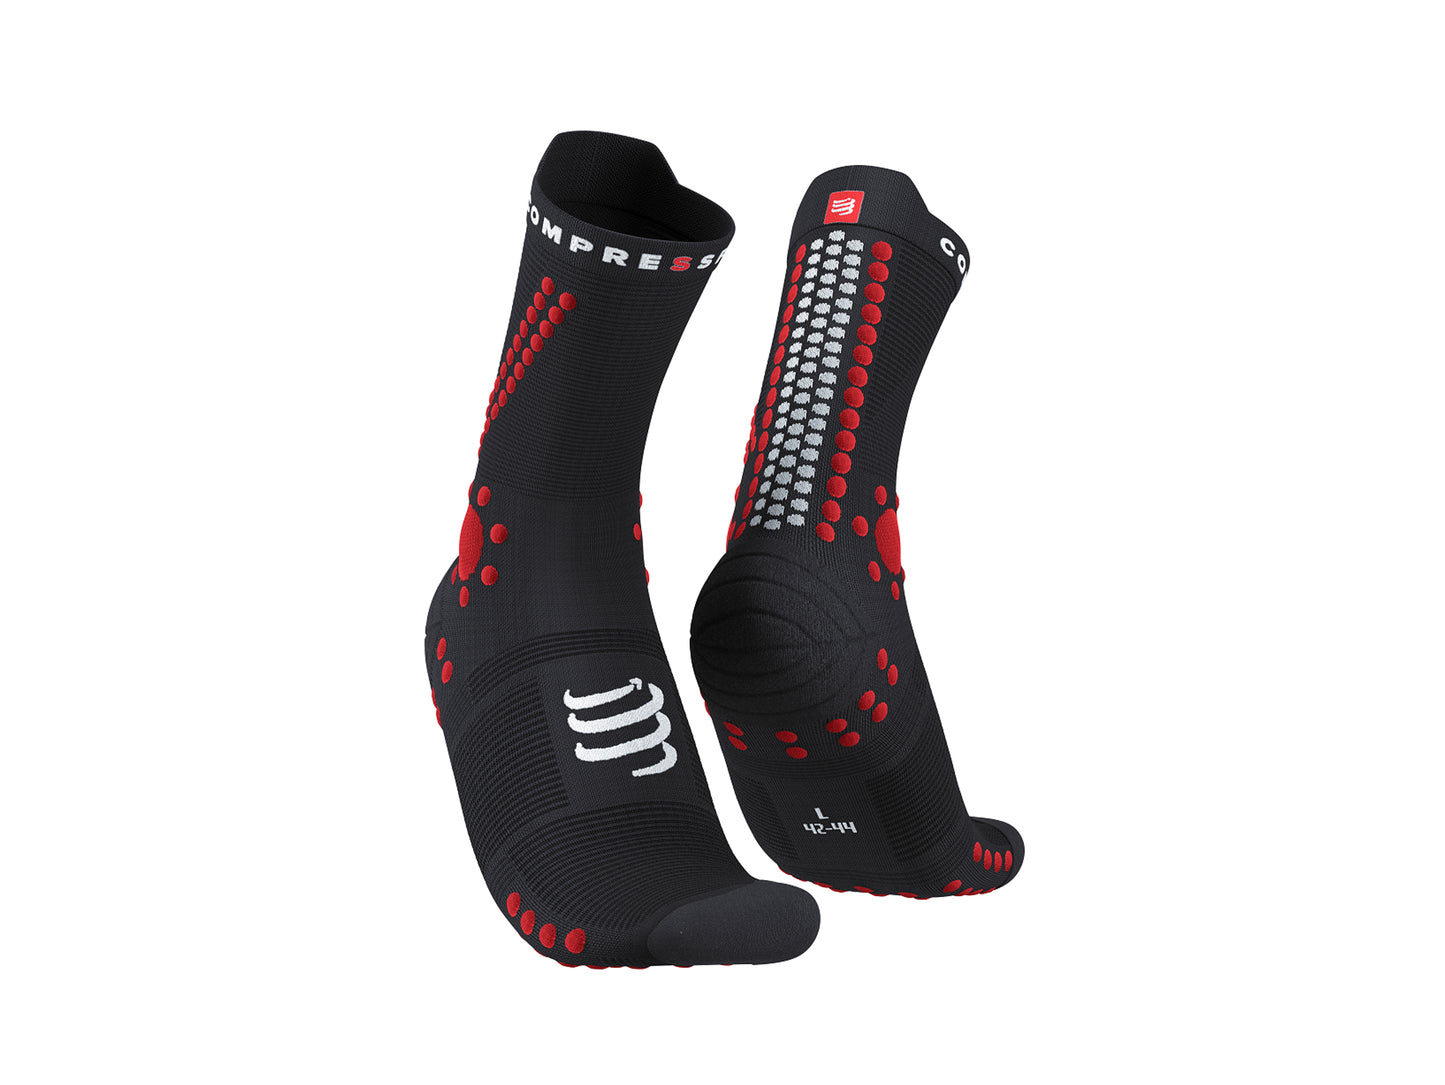 Compressport Unisex's Pro Racing Socks v4.0 Trail - Black/Red